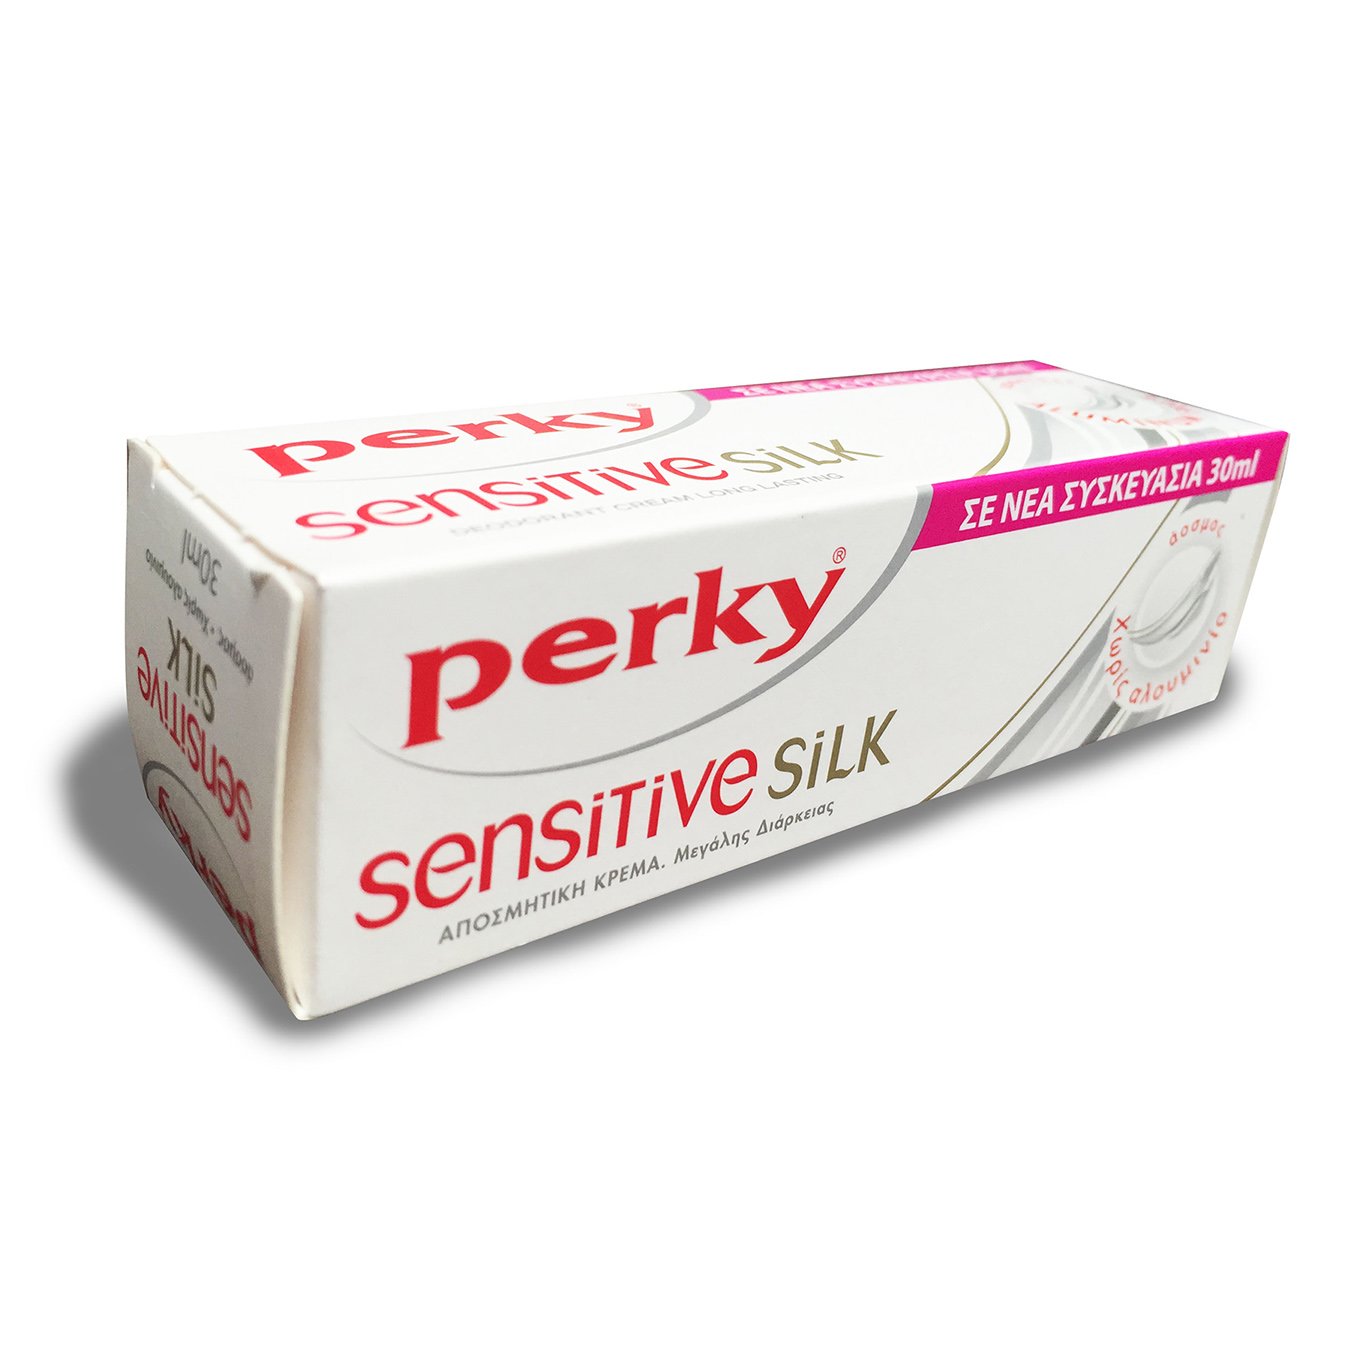 Perky Sensitive Silk Ουδέτερη Αποσμητική Κρέμα Σώματος 30ml